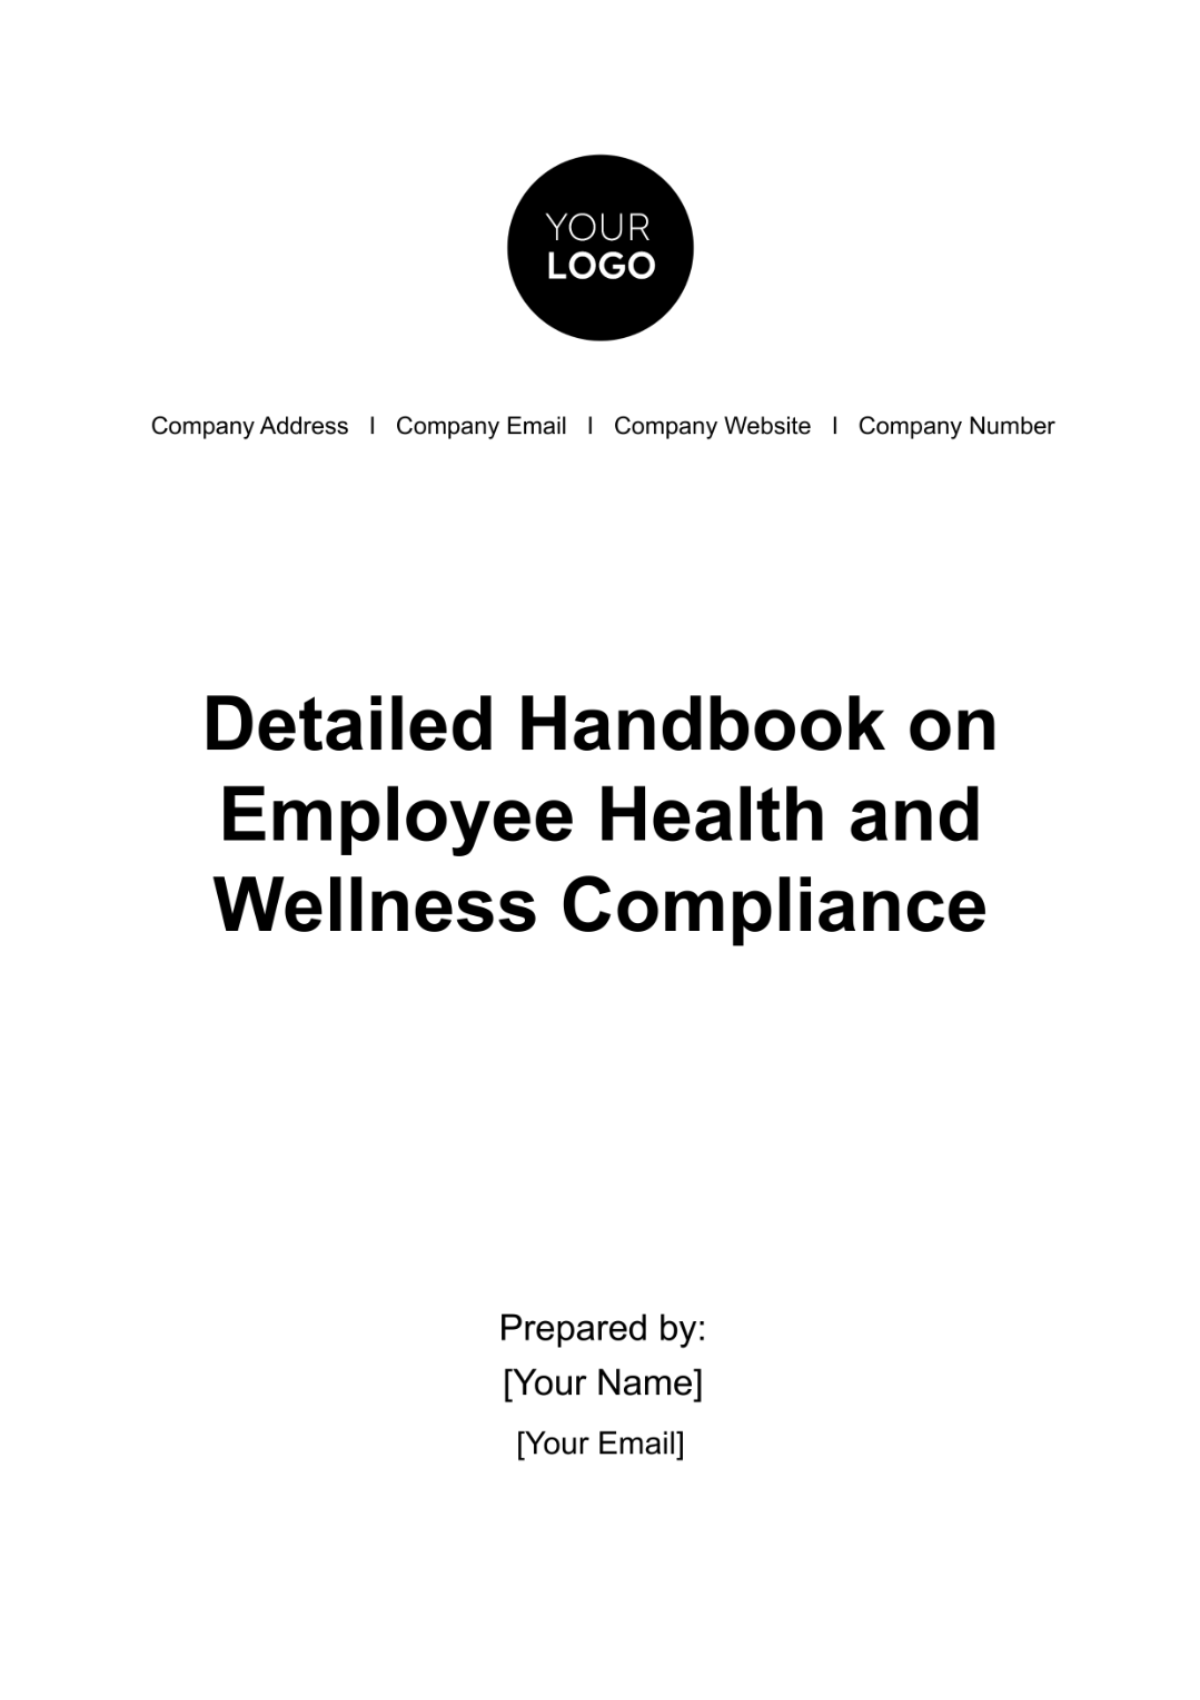 Free Detailed Handbook on Employee Health and Wellness Compliance HR Template